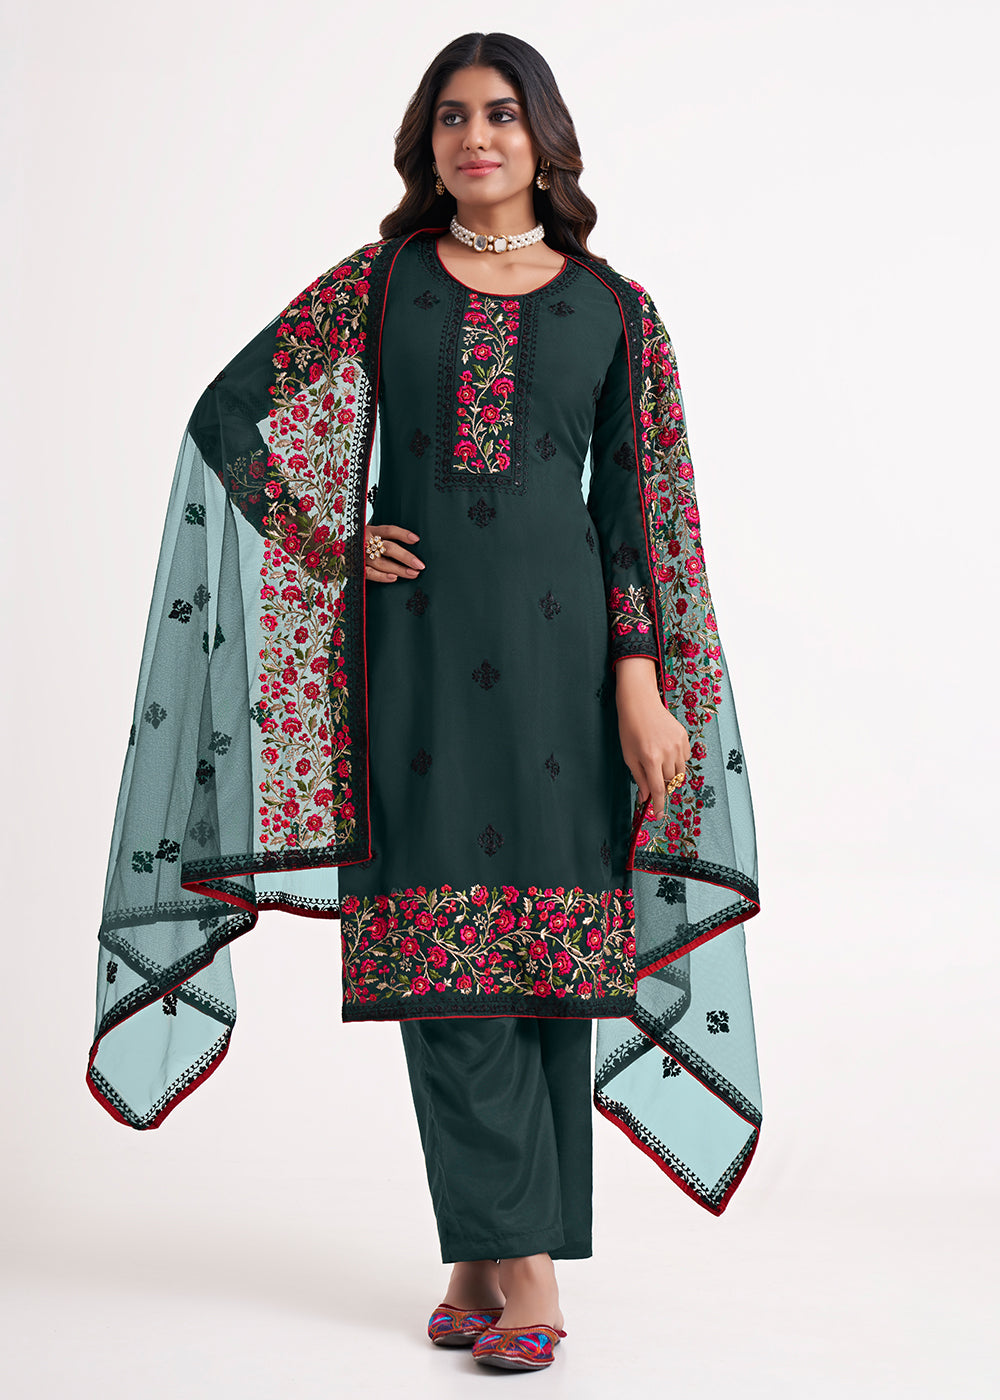 Buy Now Fancy Gorgeous Green Eid Festive Salwar Suit Online in USA, UK, Canada, Germany, Australia & Worldwide at Empress Clothing.